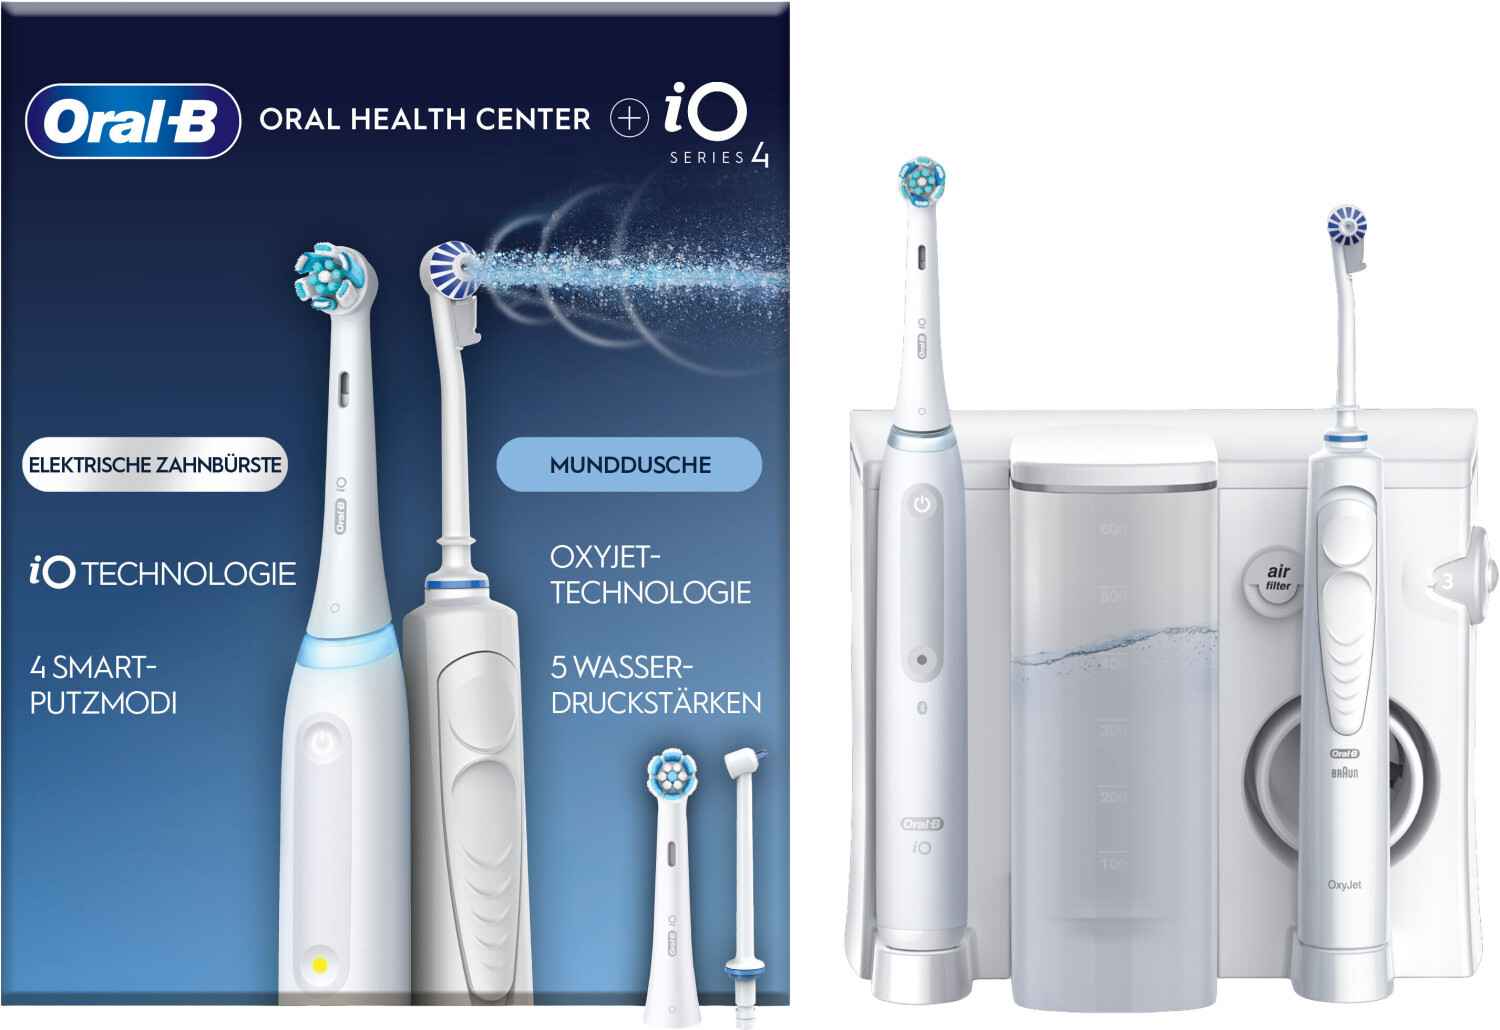 Oral-B Oral Health Center + iO Series 4 white